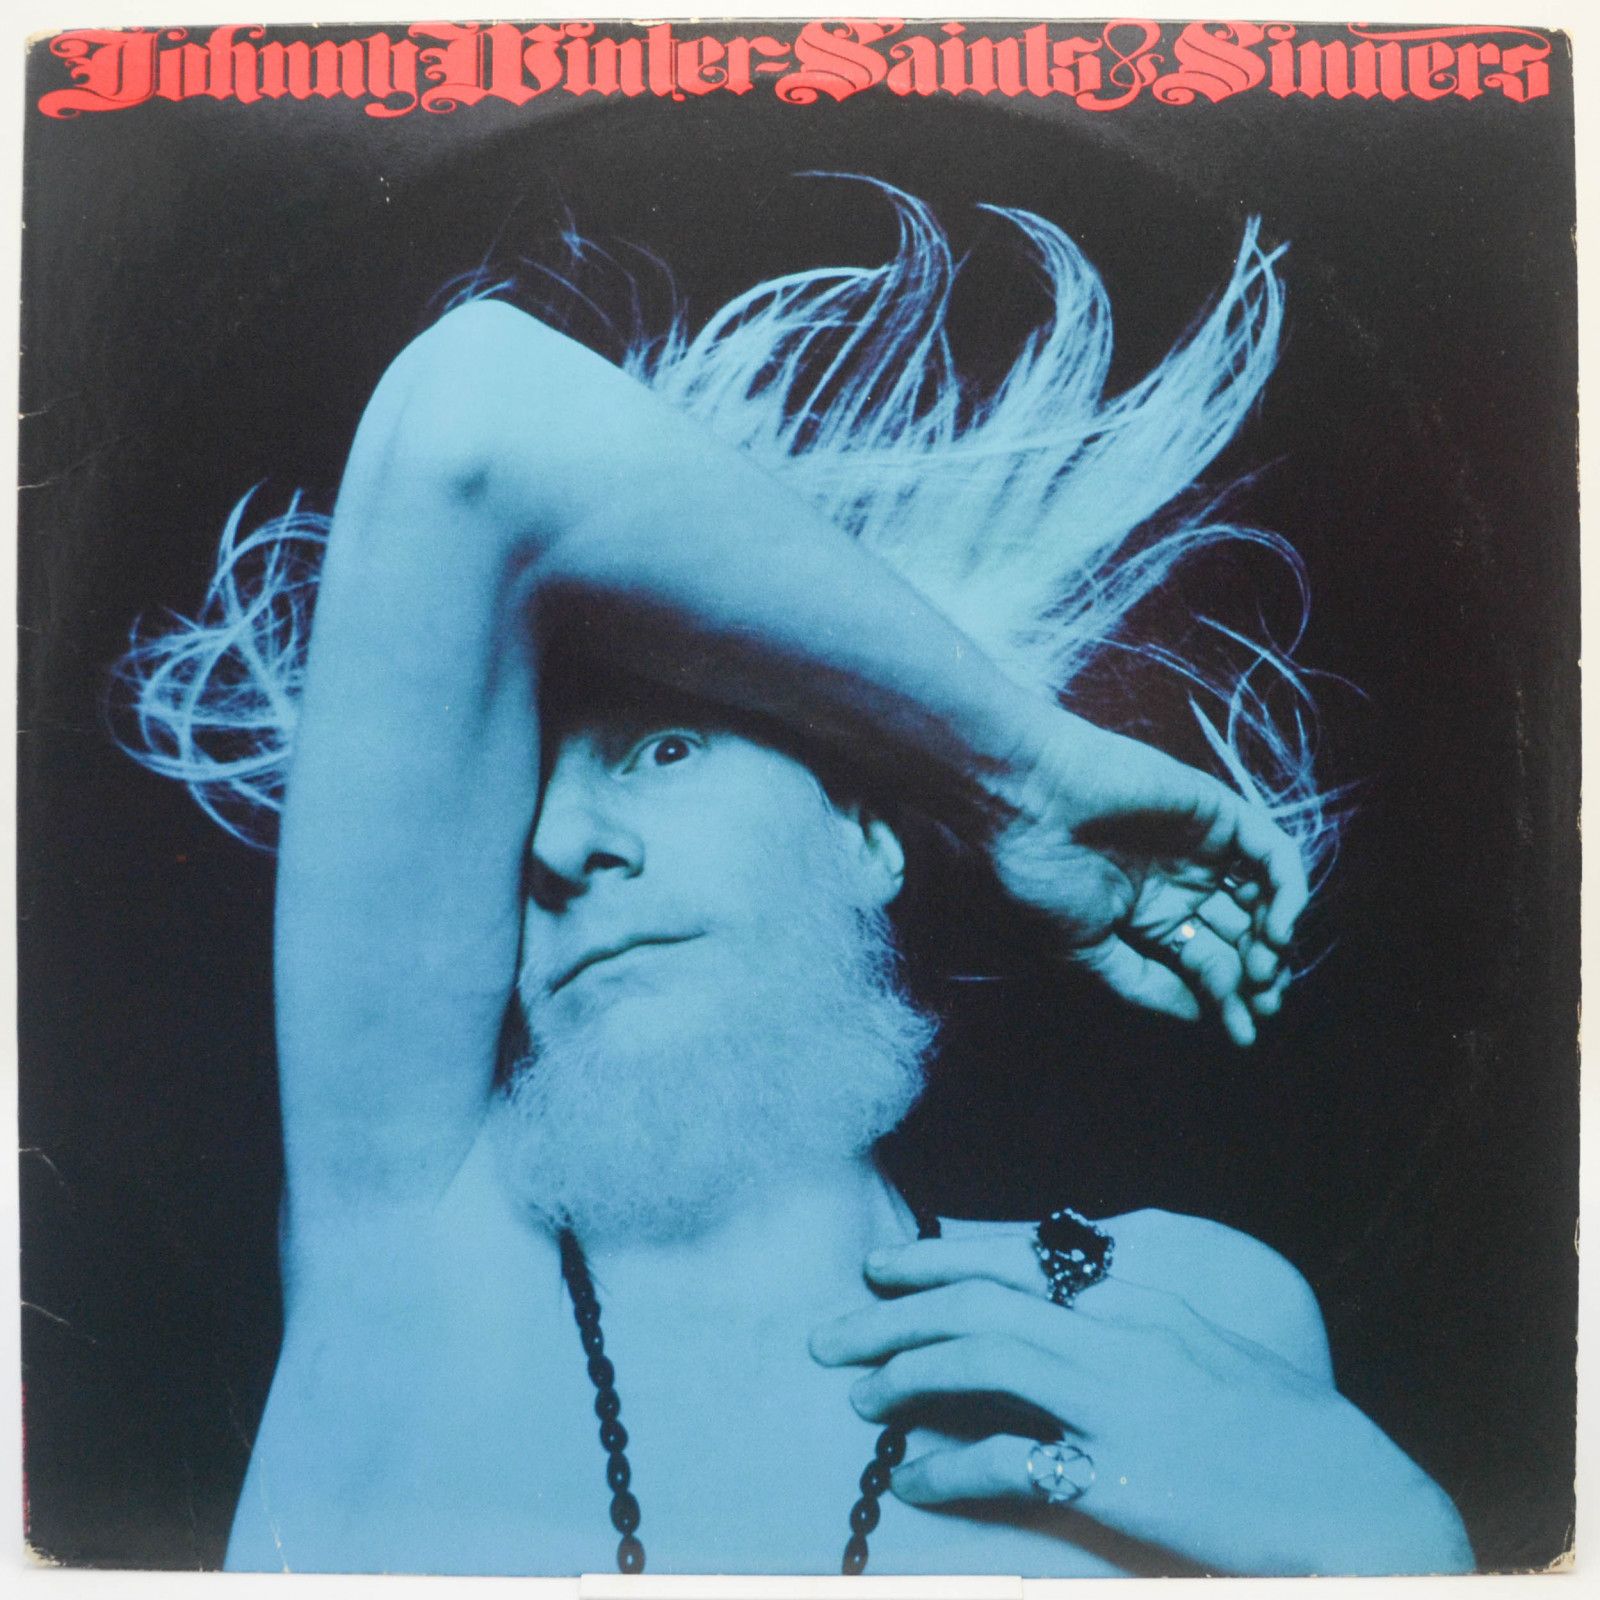 Johnny Winter — Saints & Sinners (USA), 1974